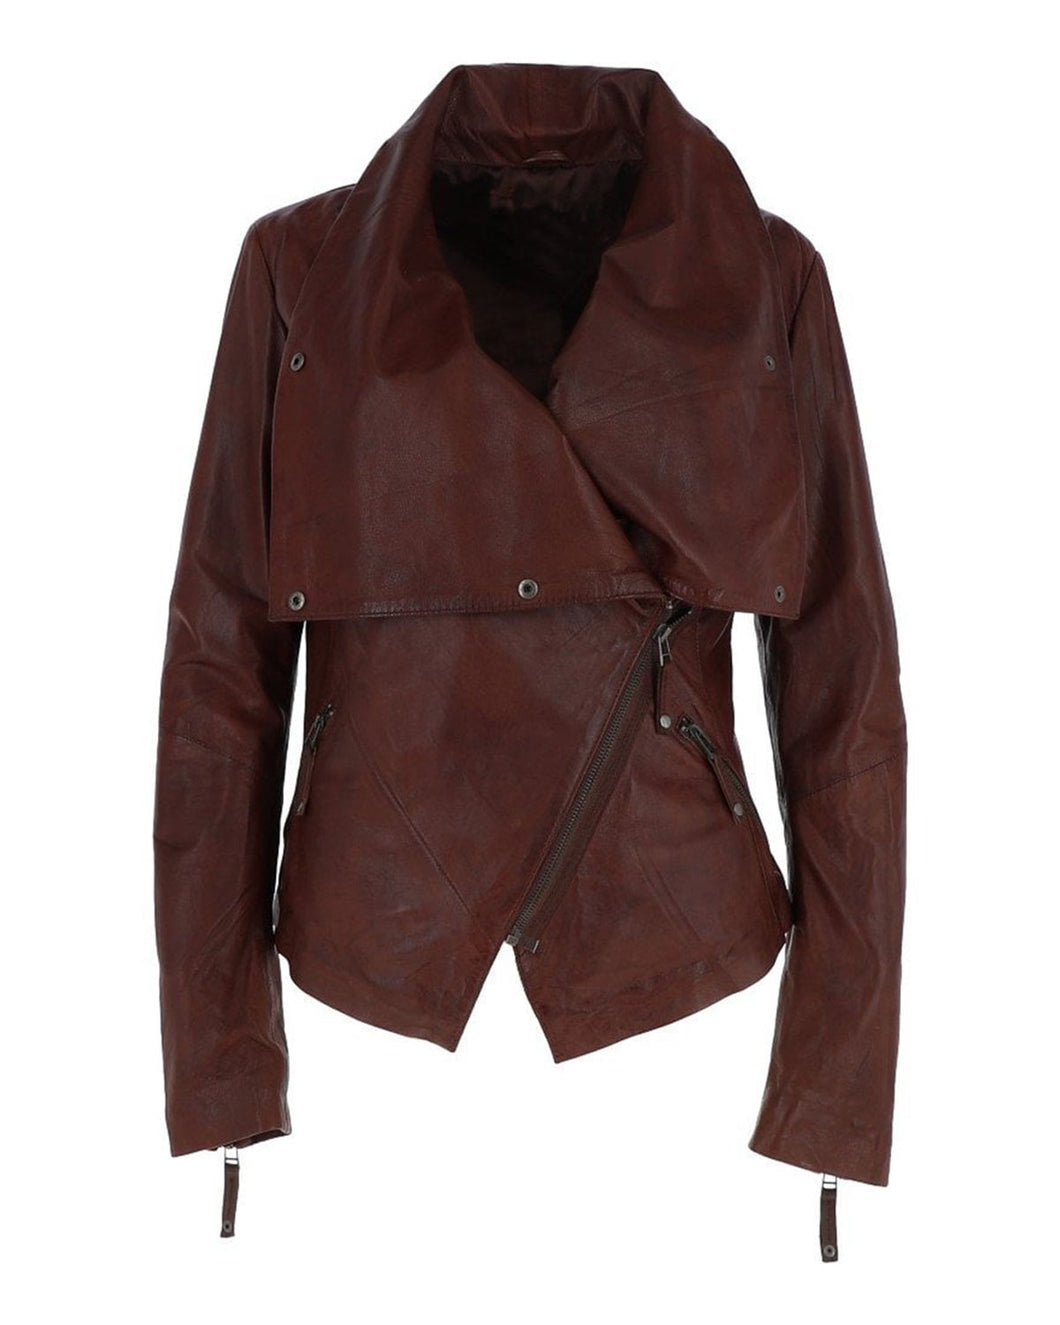 Women's Stylish Brown Biker Leather Jacket